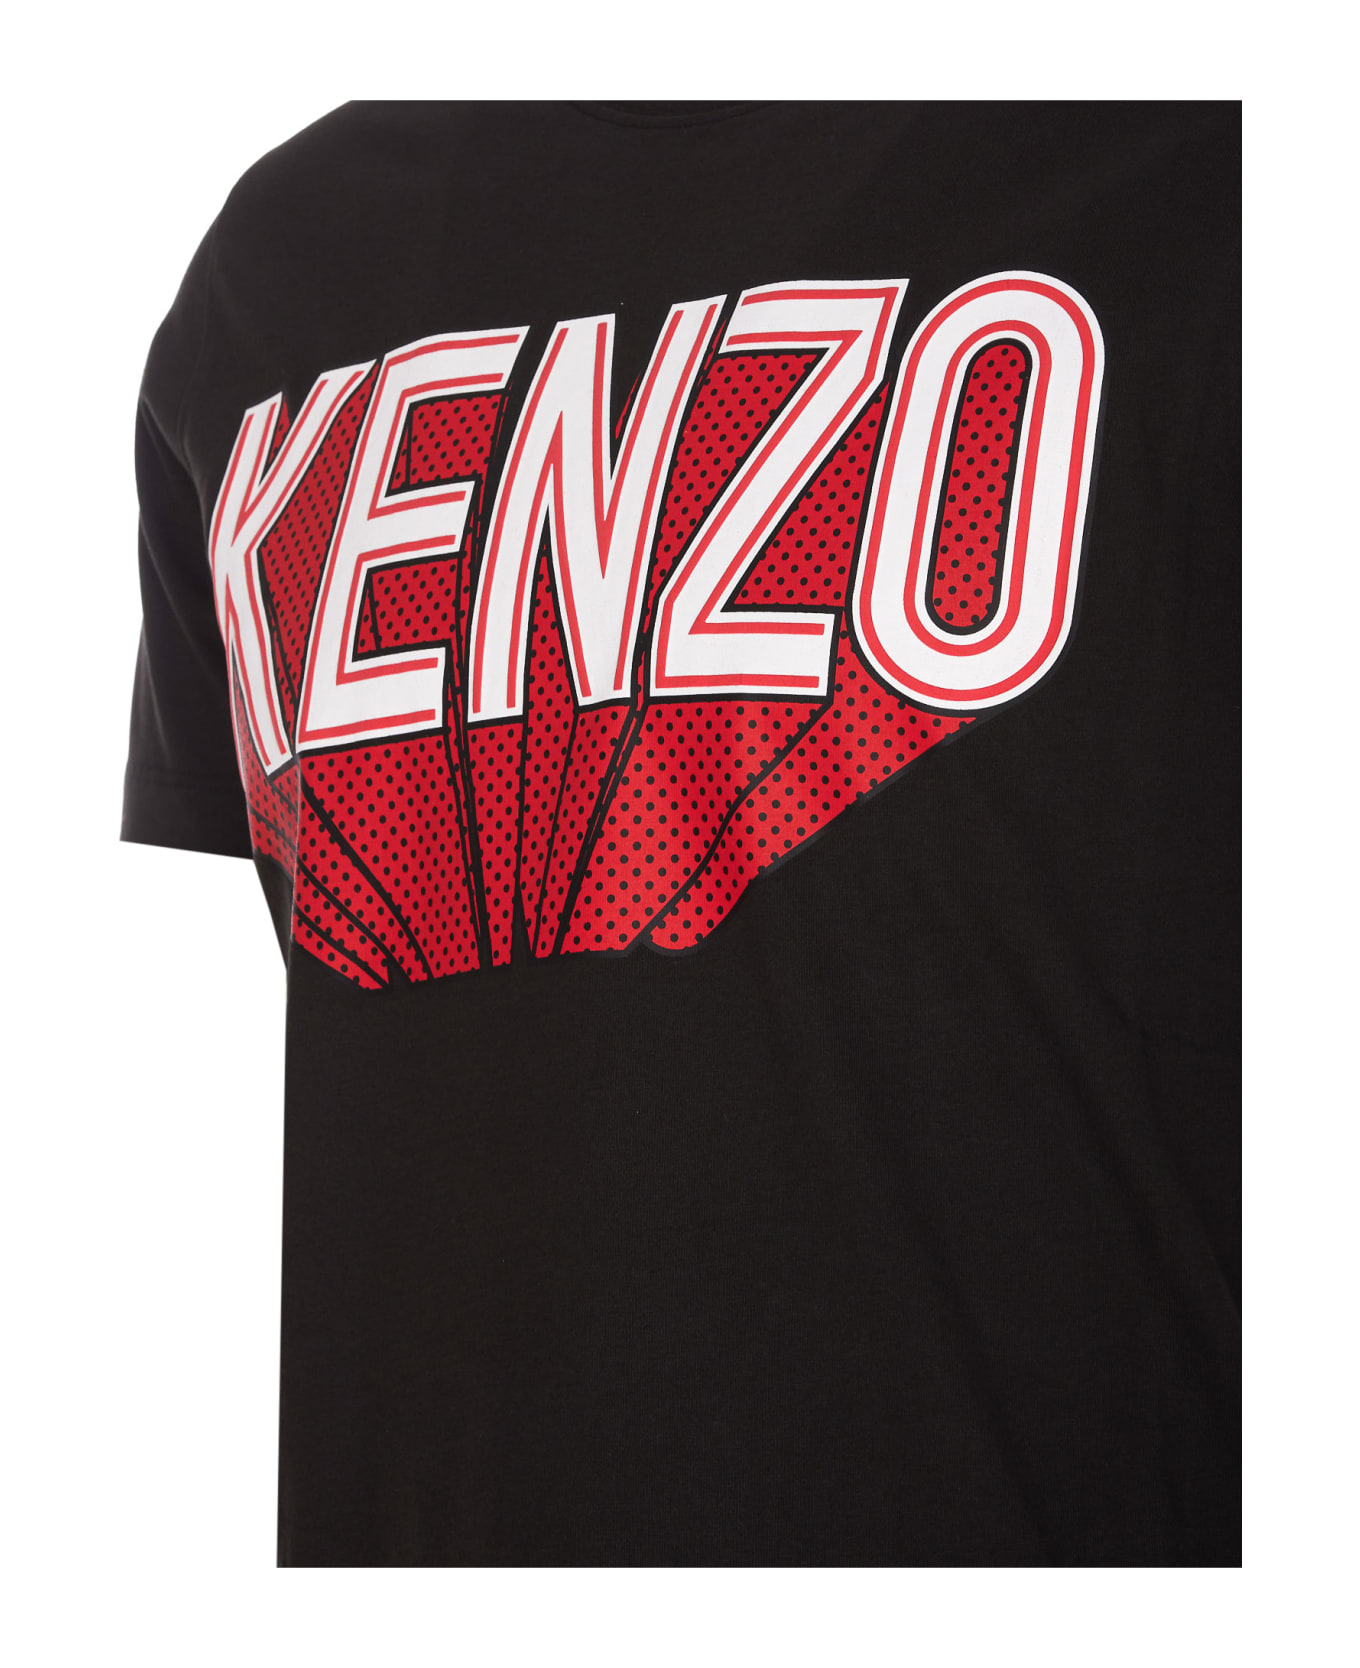 Kenzo 3d Loose T-shirt - Black